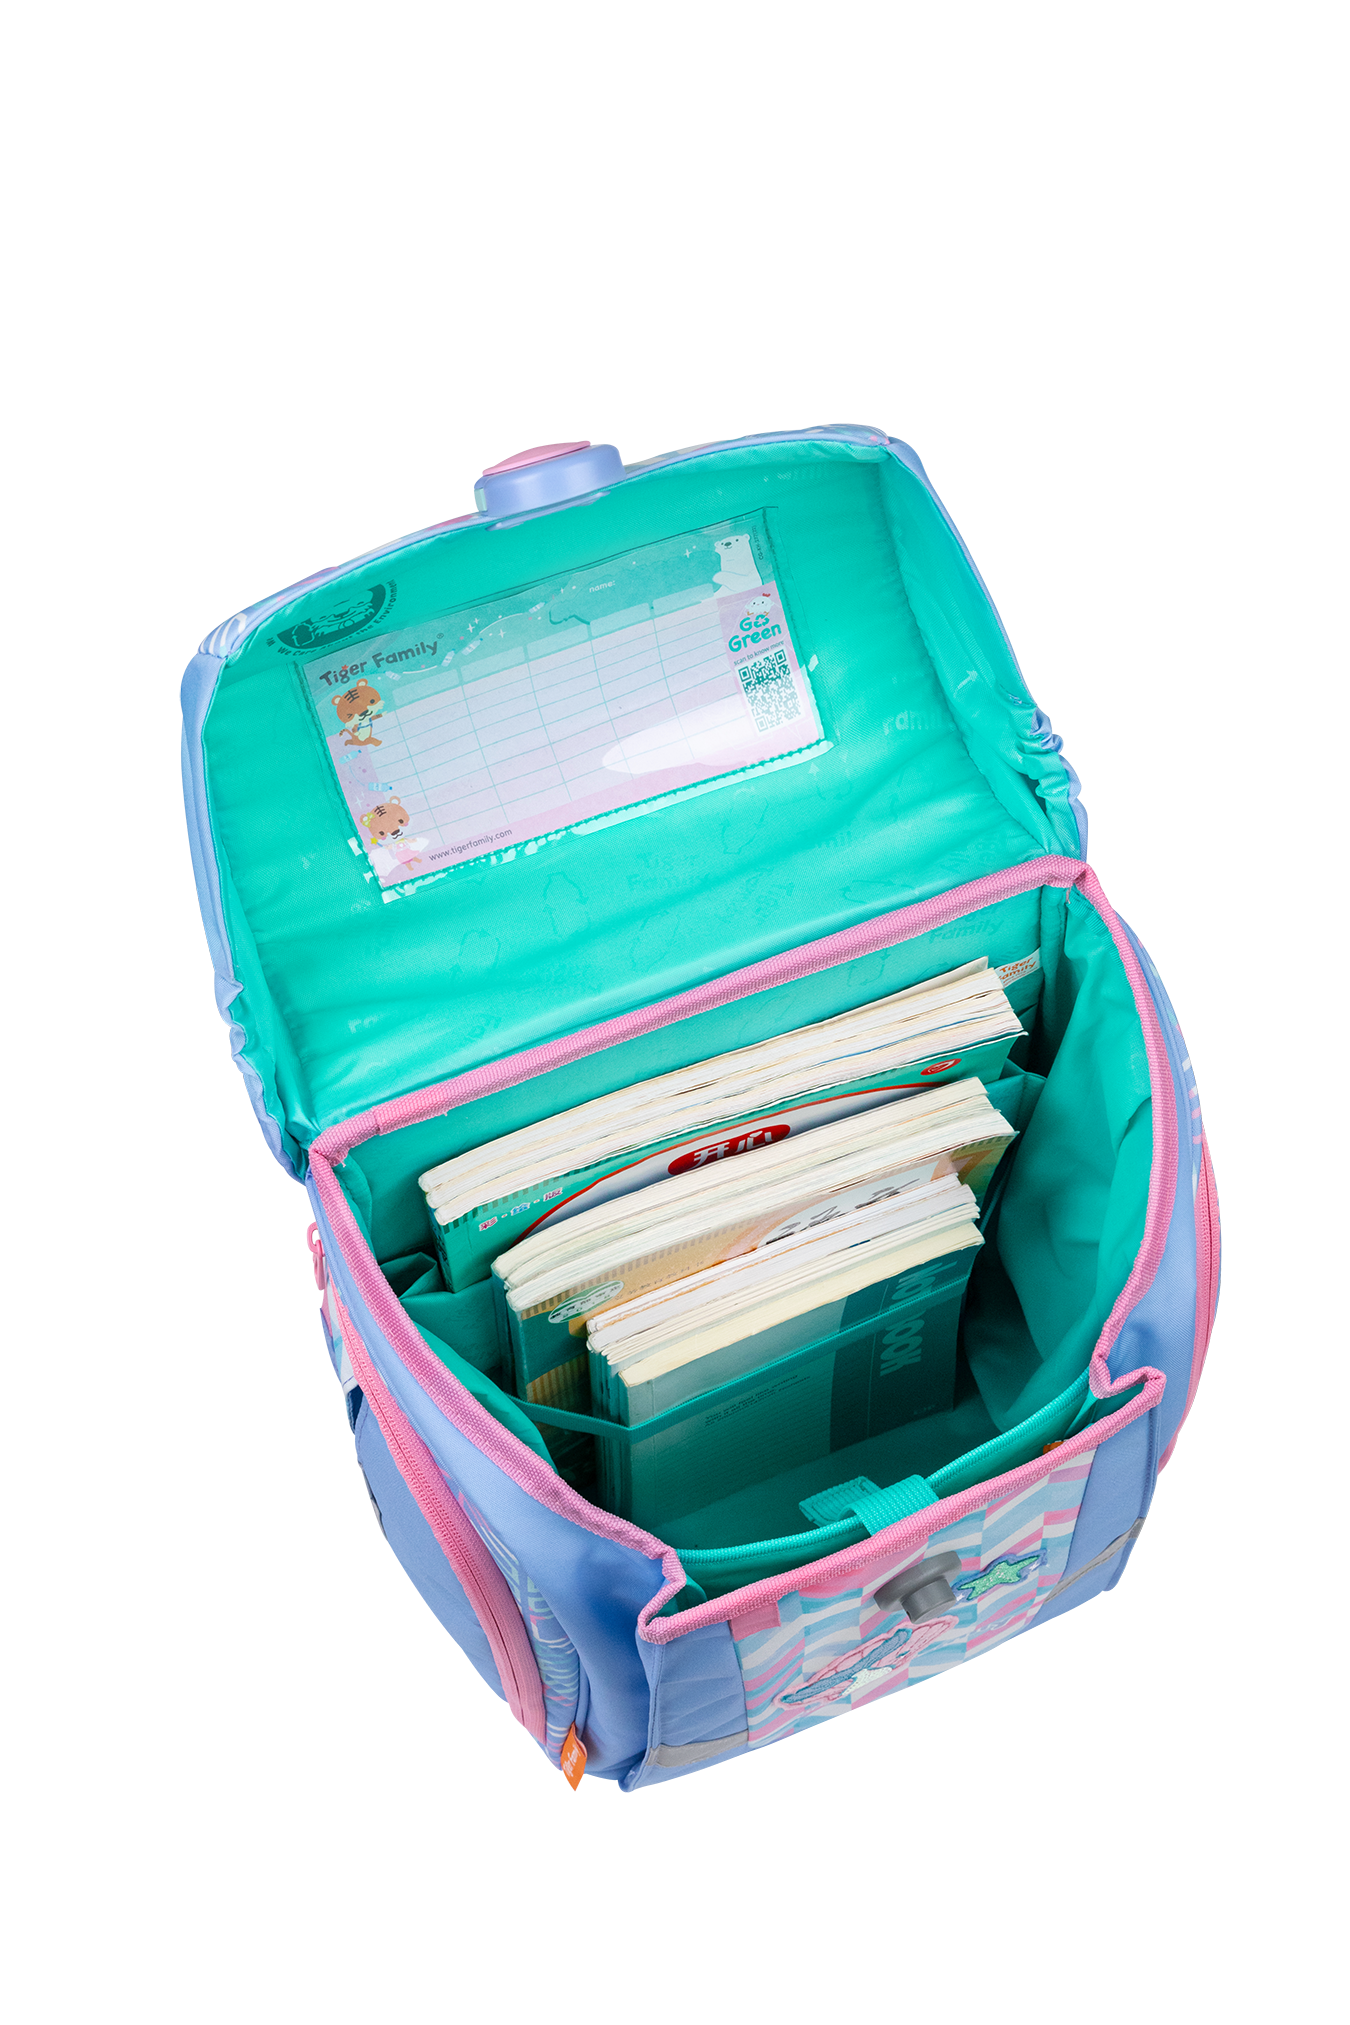 Cặp Chống Gù Infinity Schoolbag - Pastel Ocean - Go Green - Tiger Family TGFY-002A